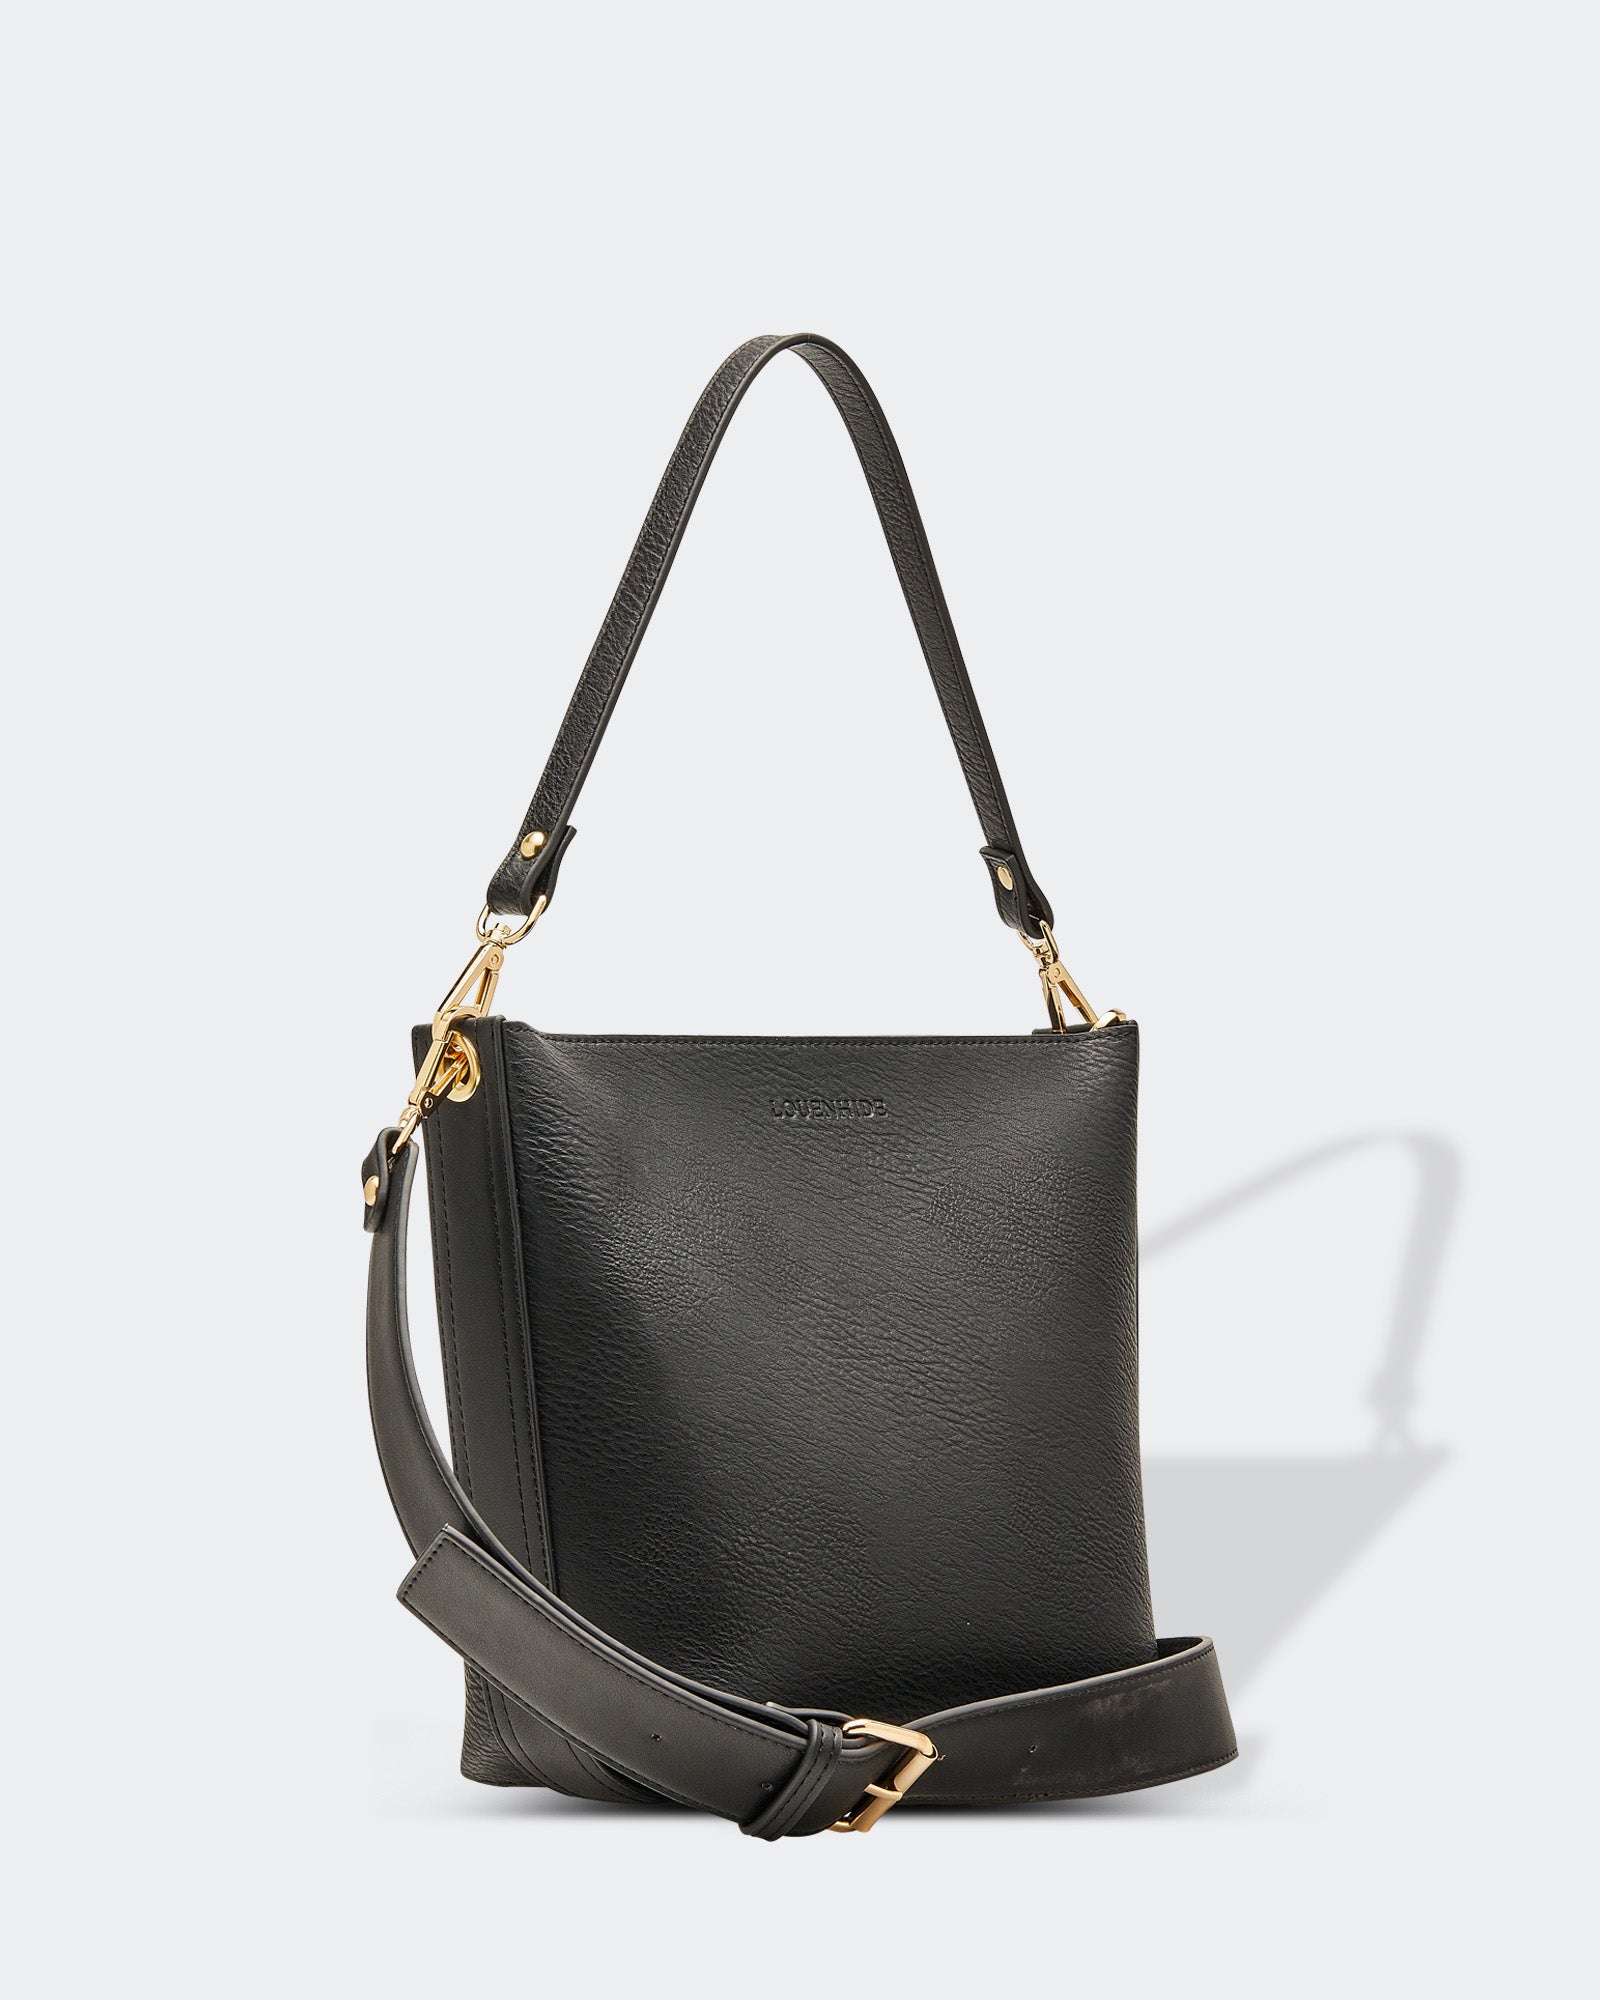 Louenhide Charlie Bag - Black Accessories - Other Accessories - Handbags & Wallets by Louenhide | Grace the Boutique